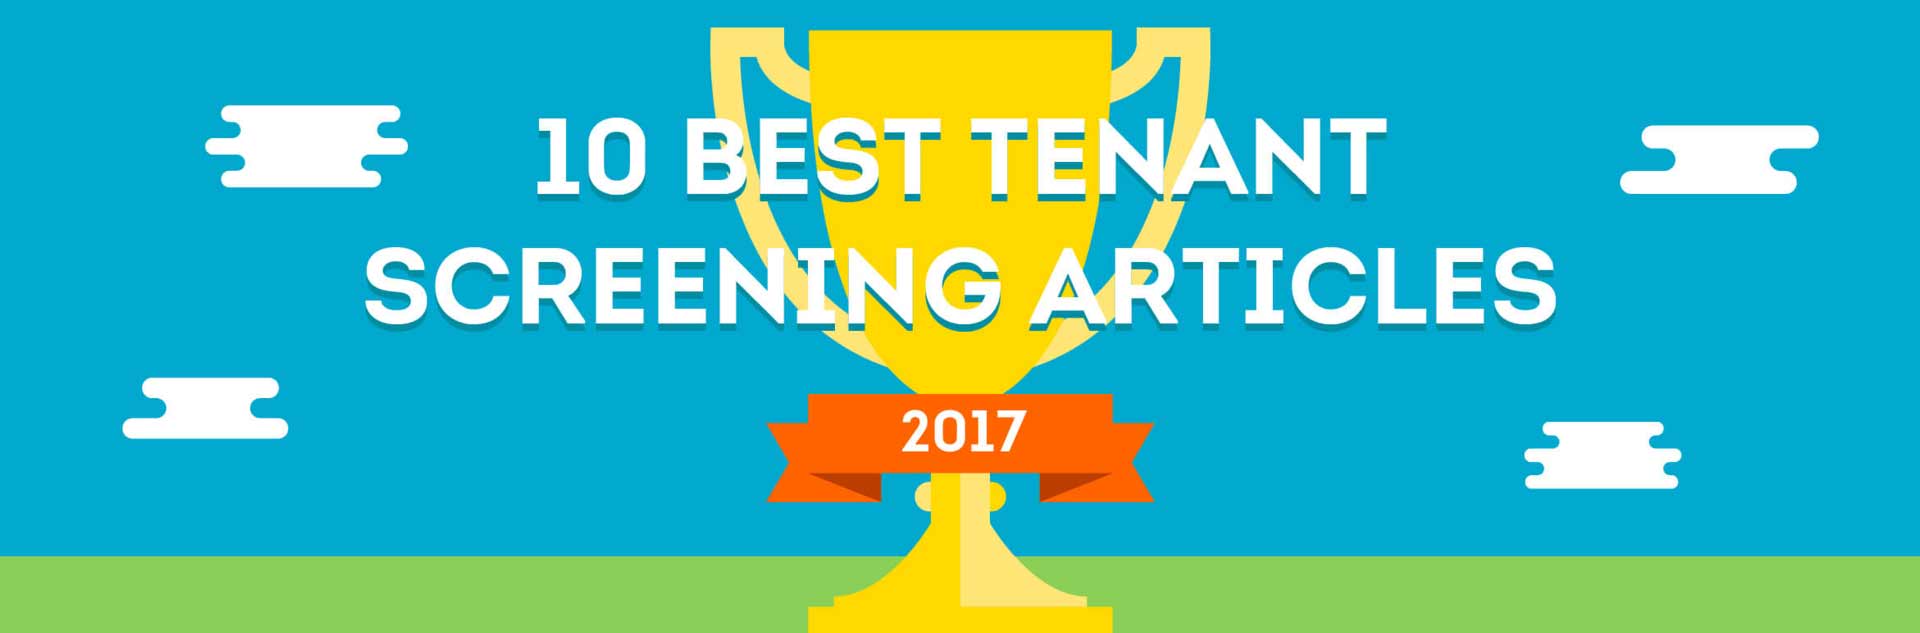 Best tenant screening articles 